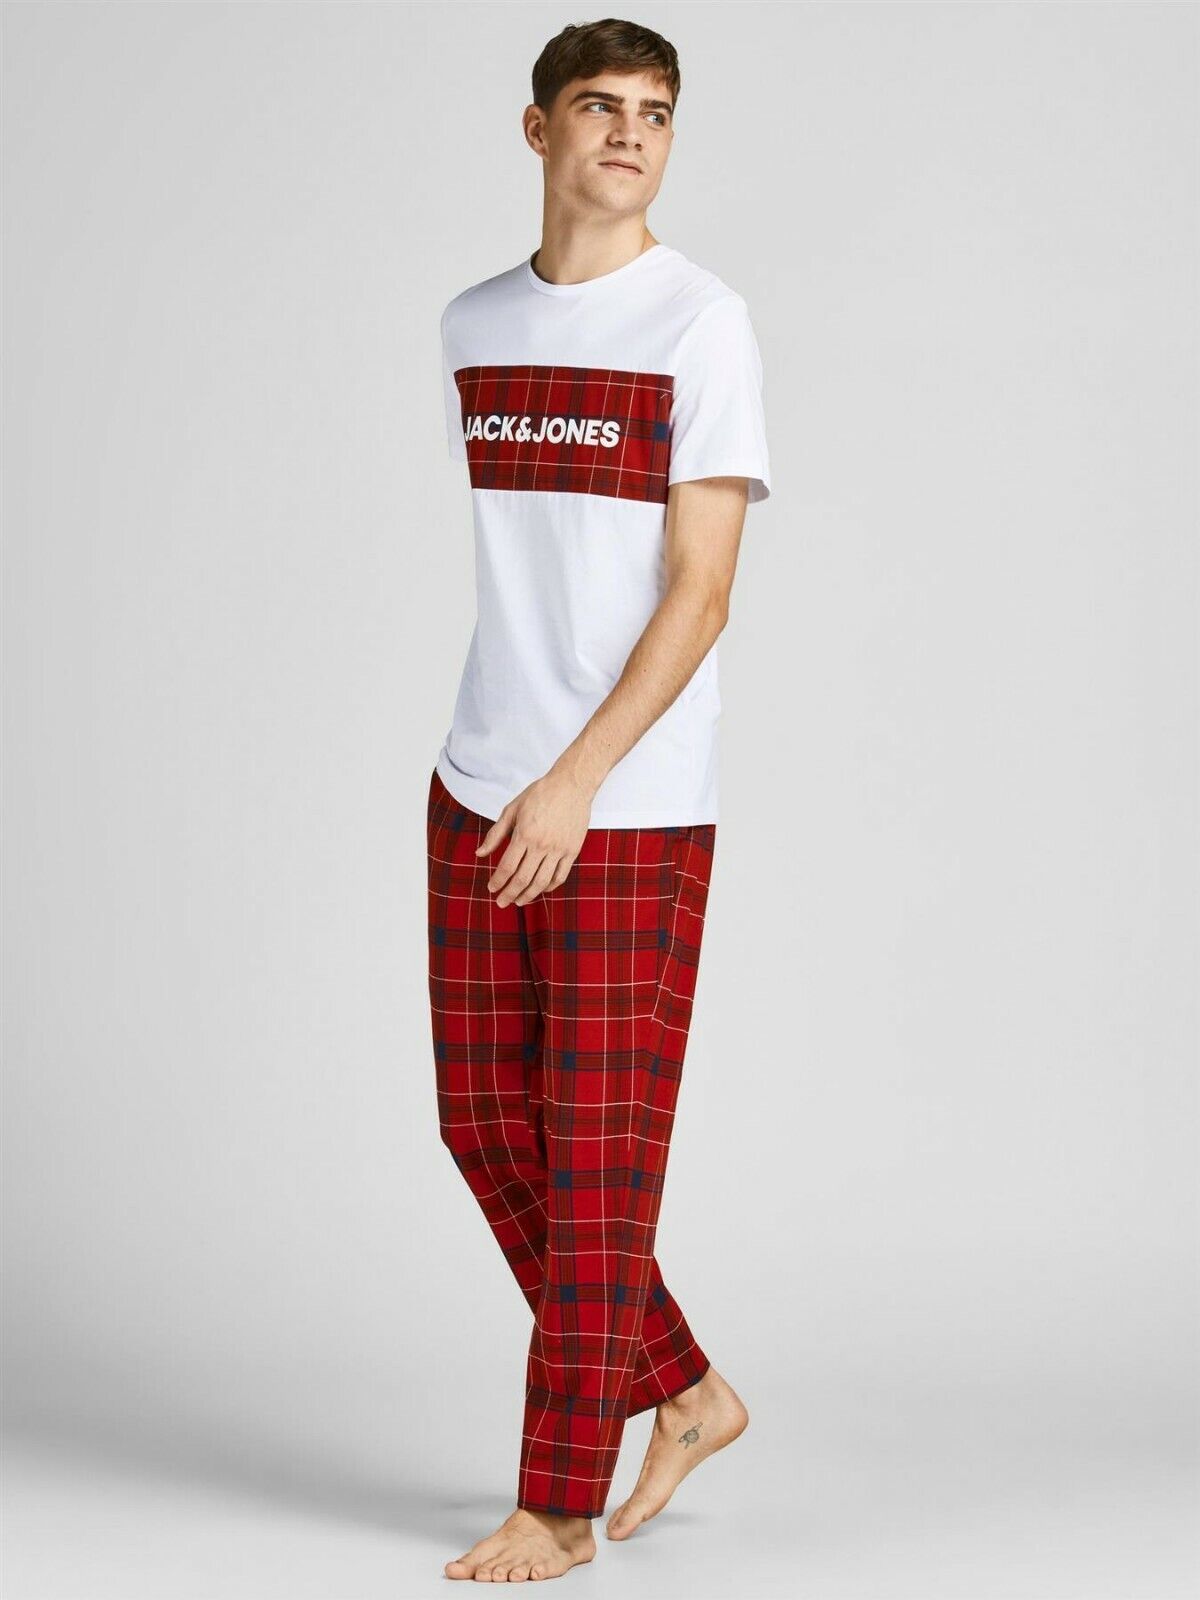 Jack & Jones 'Train' Pyjama Set in Red - VR2 Clothing